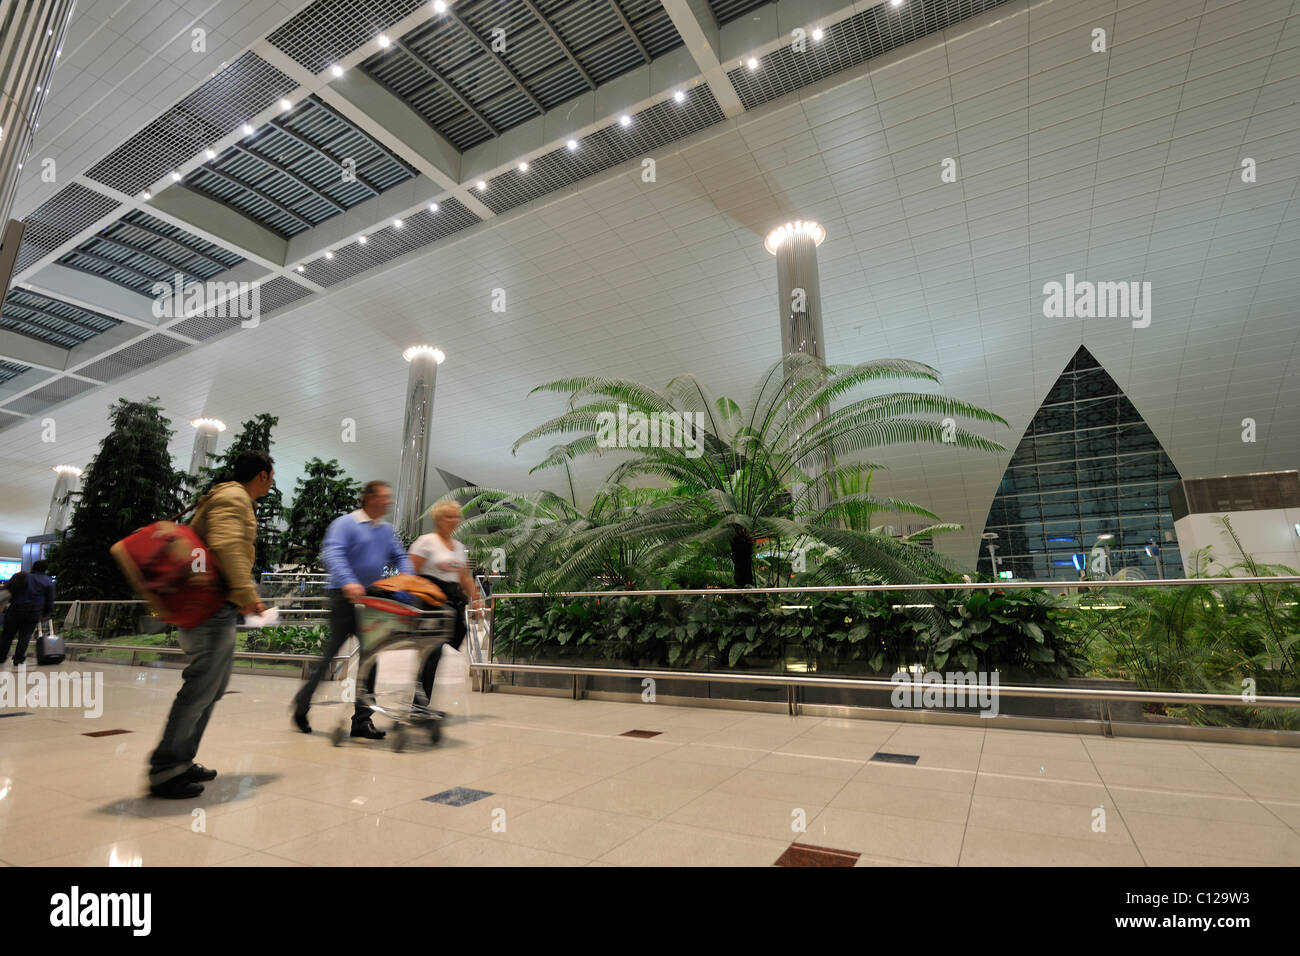 International Airport, the Emirate of Dubai, United Arab Emirates, Arabia, Middle East Stock Photo